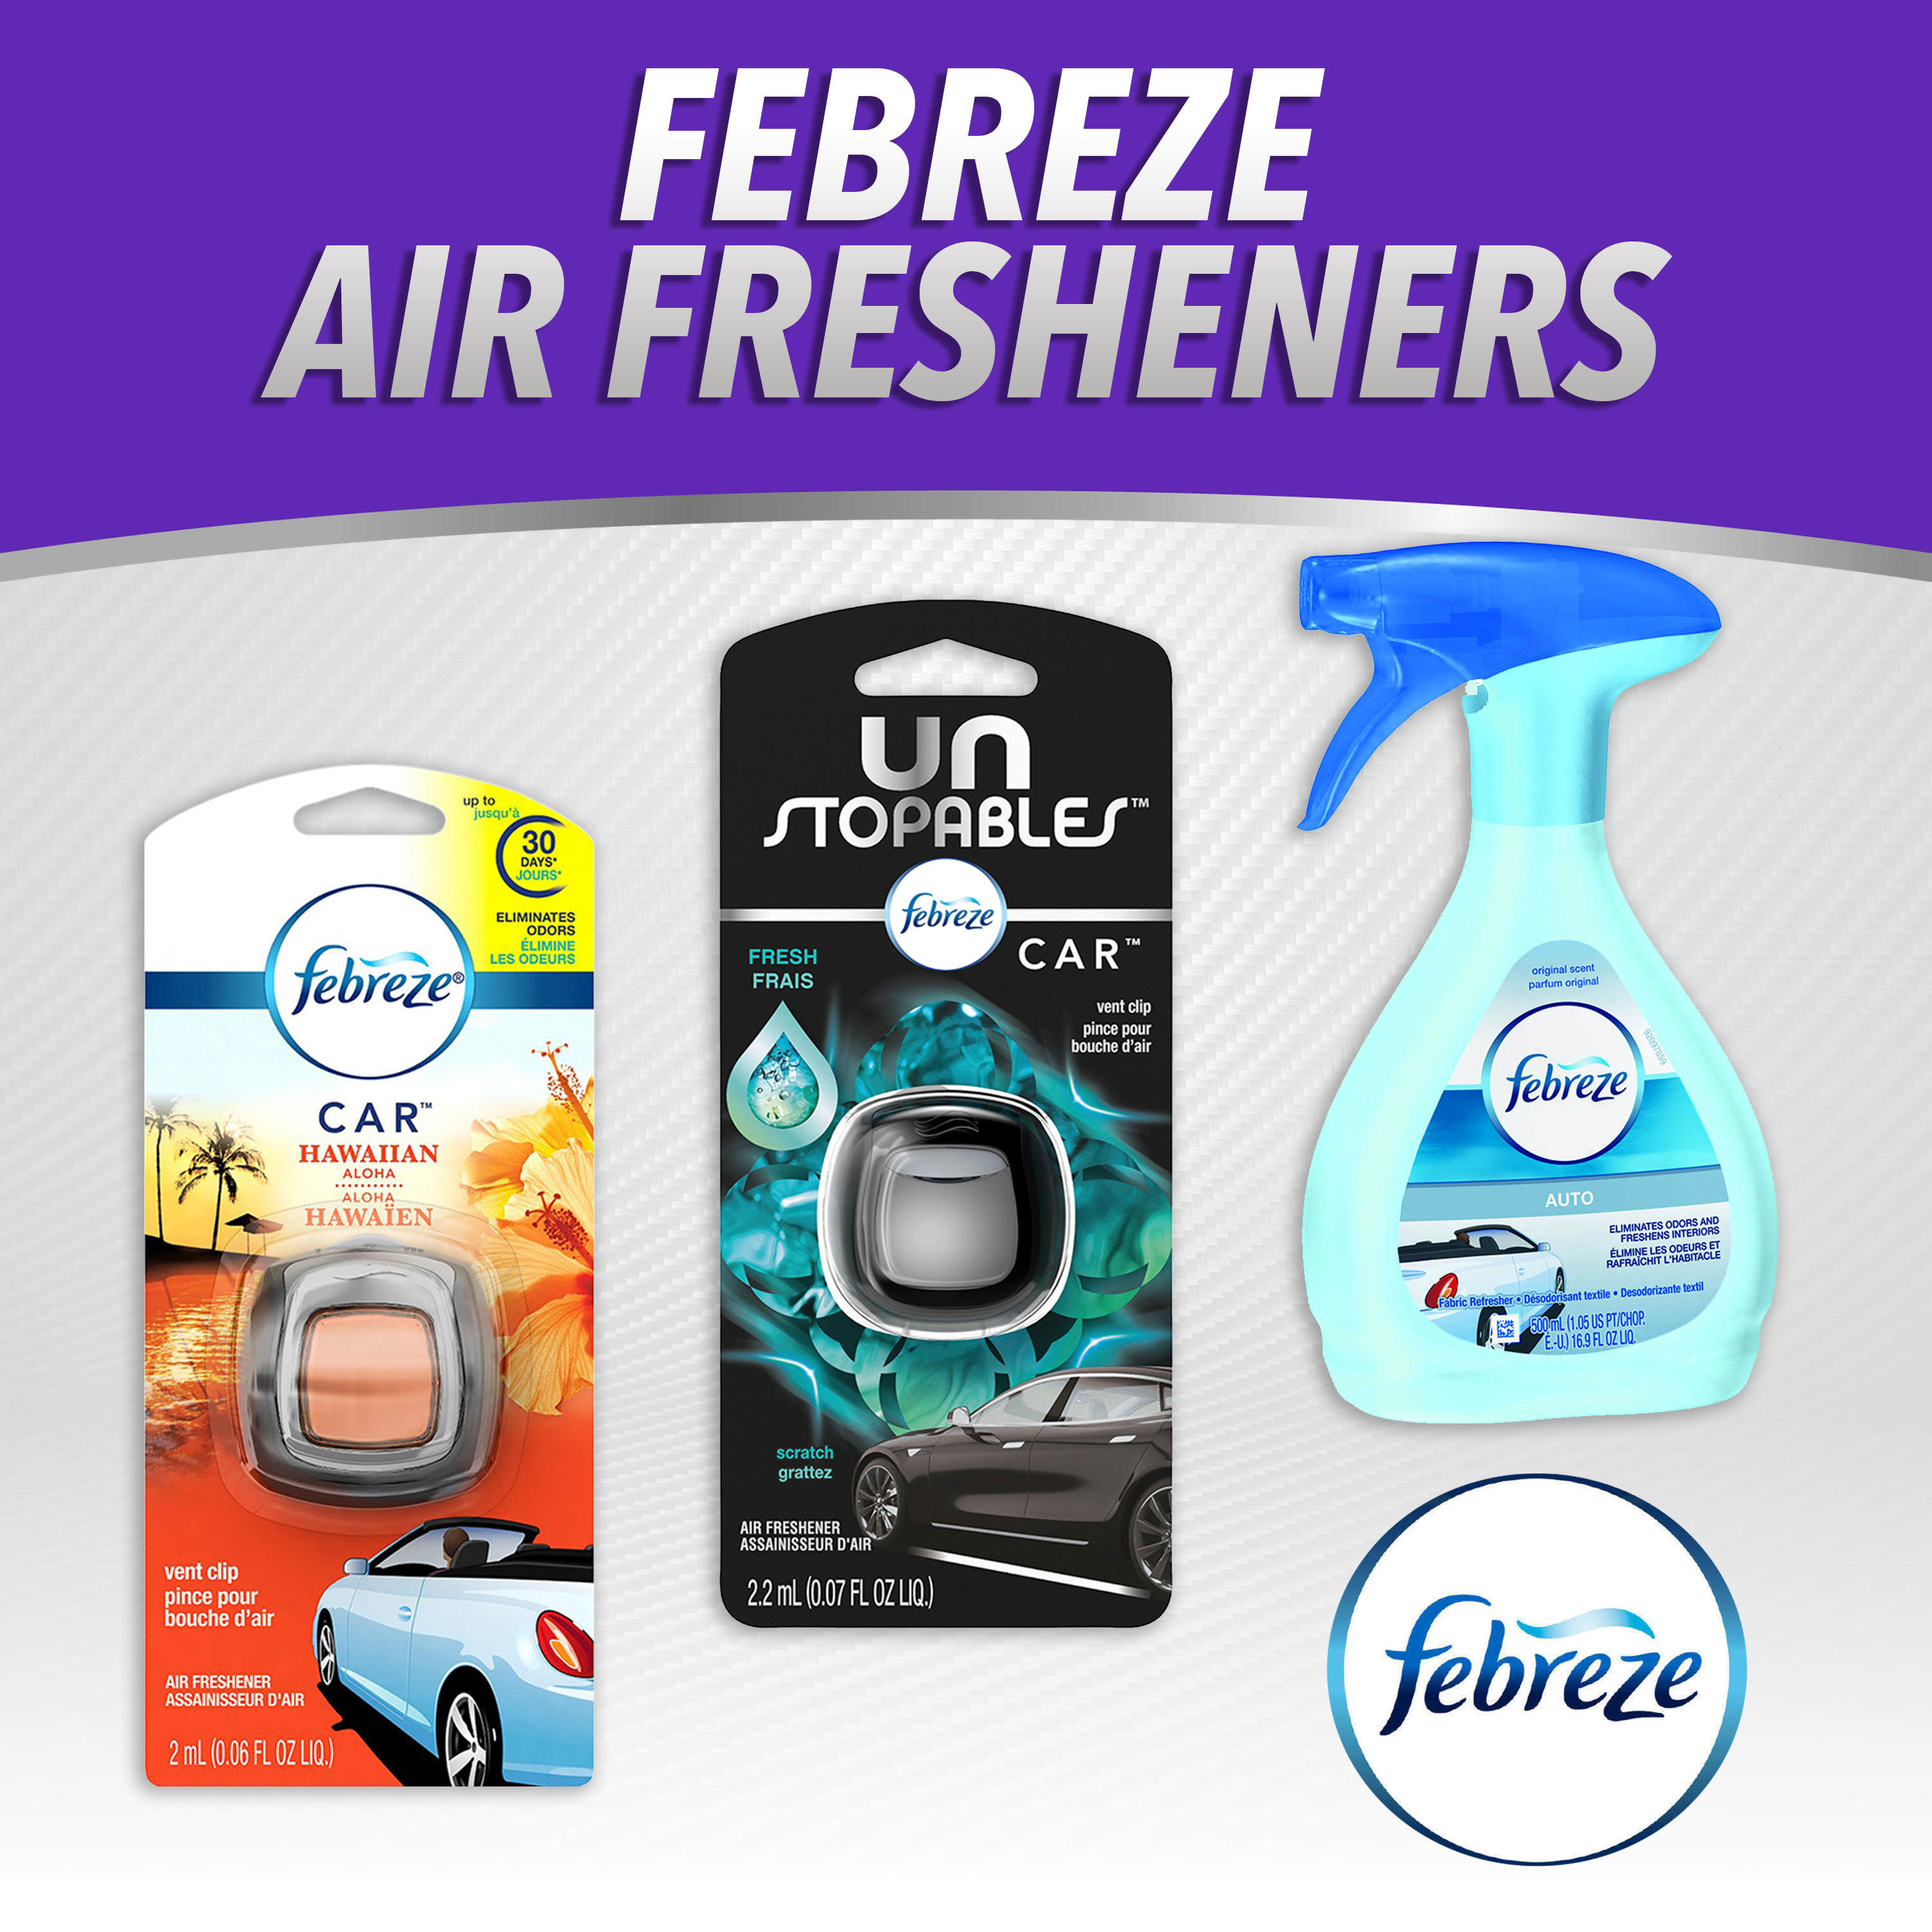 Febreze Air Fresheners